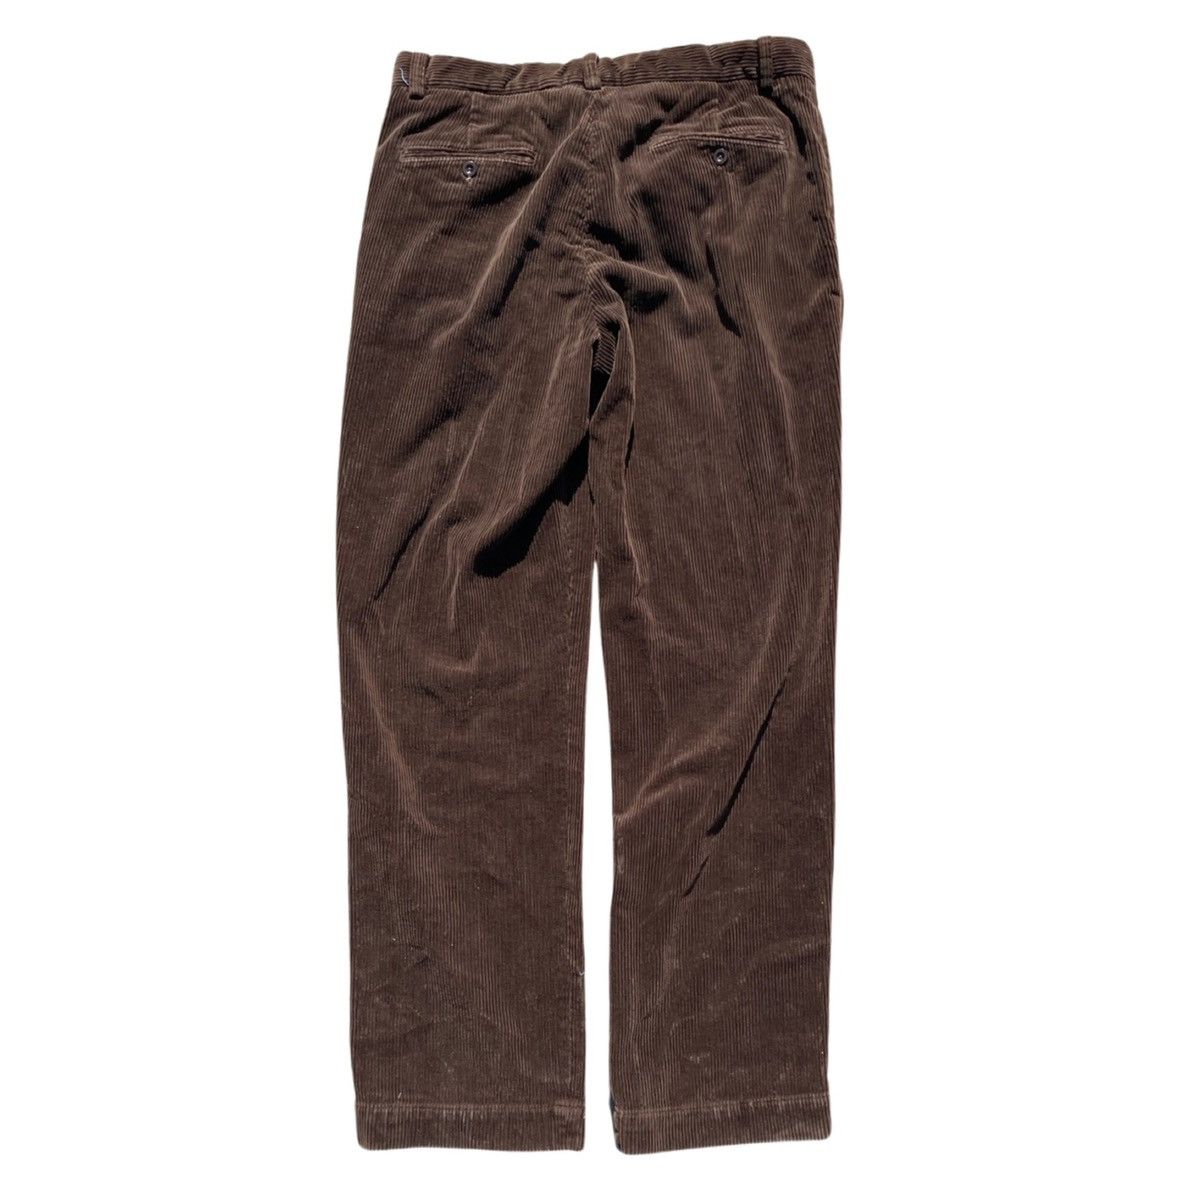 Vintage Dark Brown Corduroy Pants Size US 33 - 2 Preview